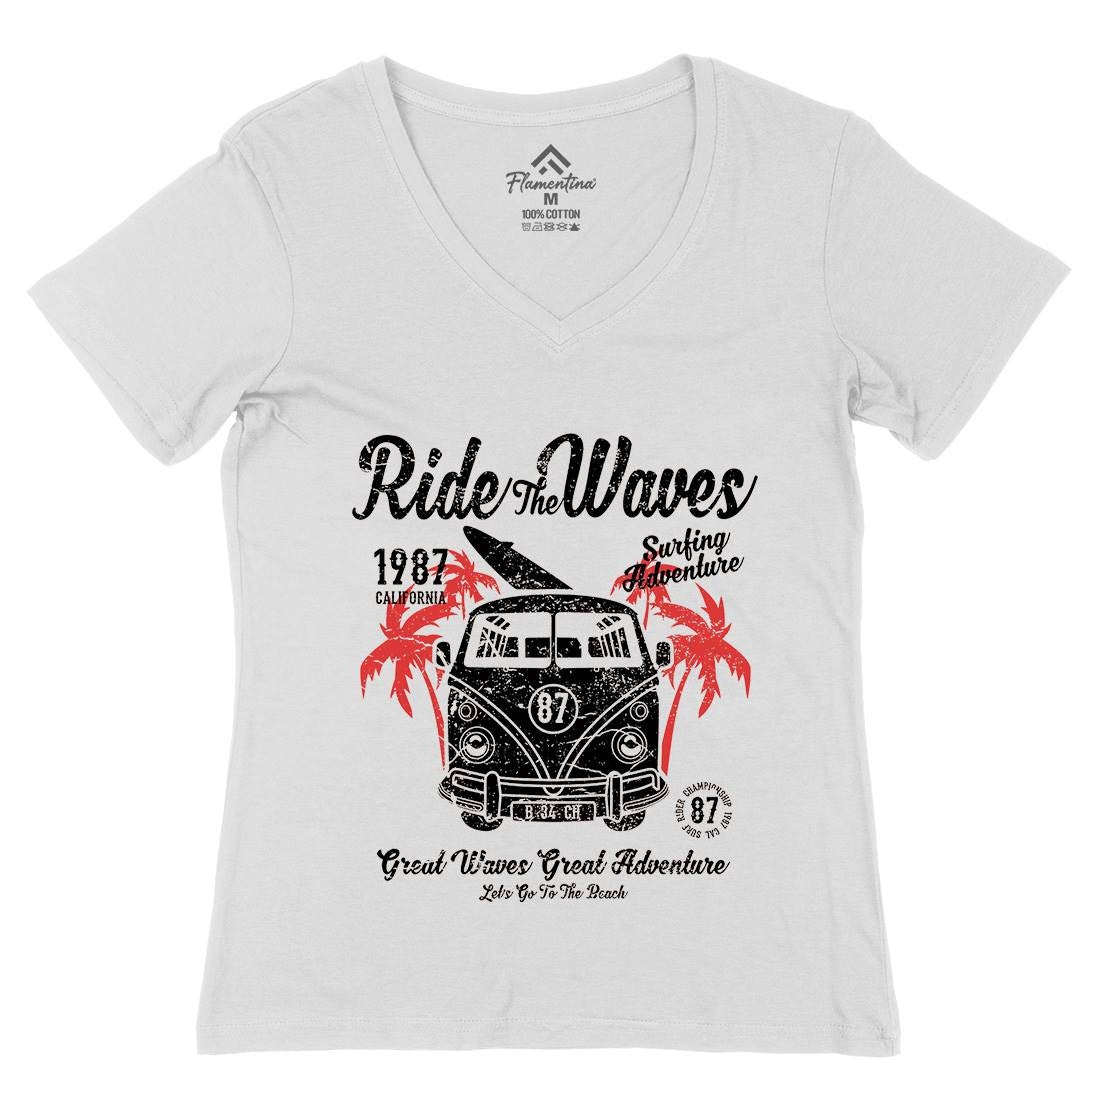 Ride The Waves Womens Organic V-Neck T-Shirt Surf A119